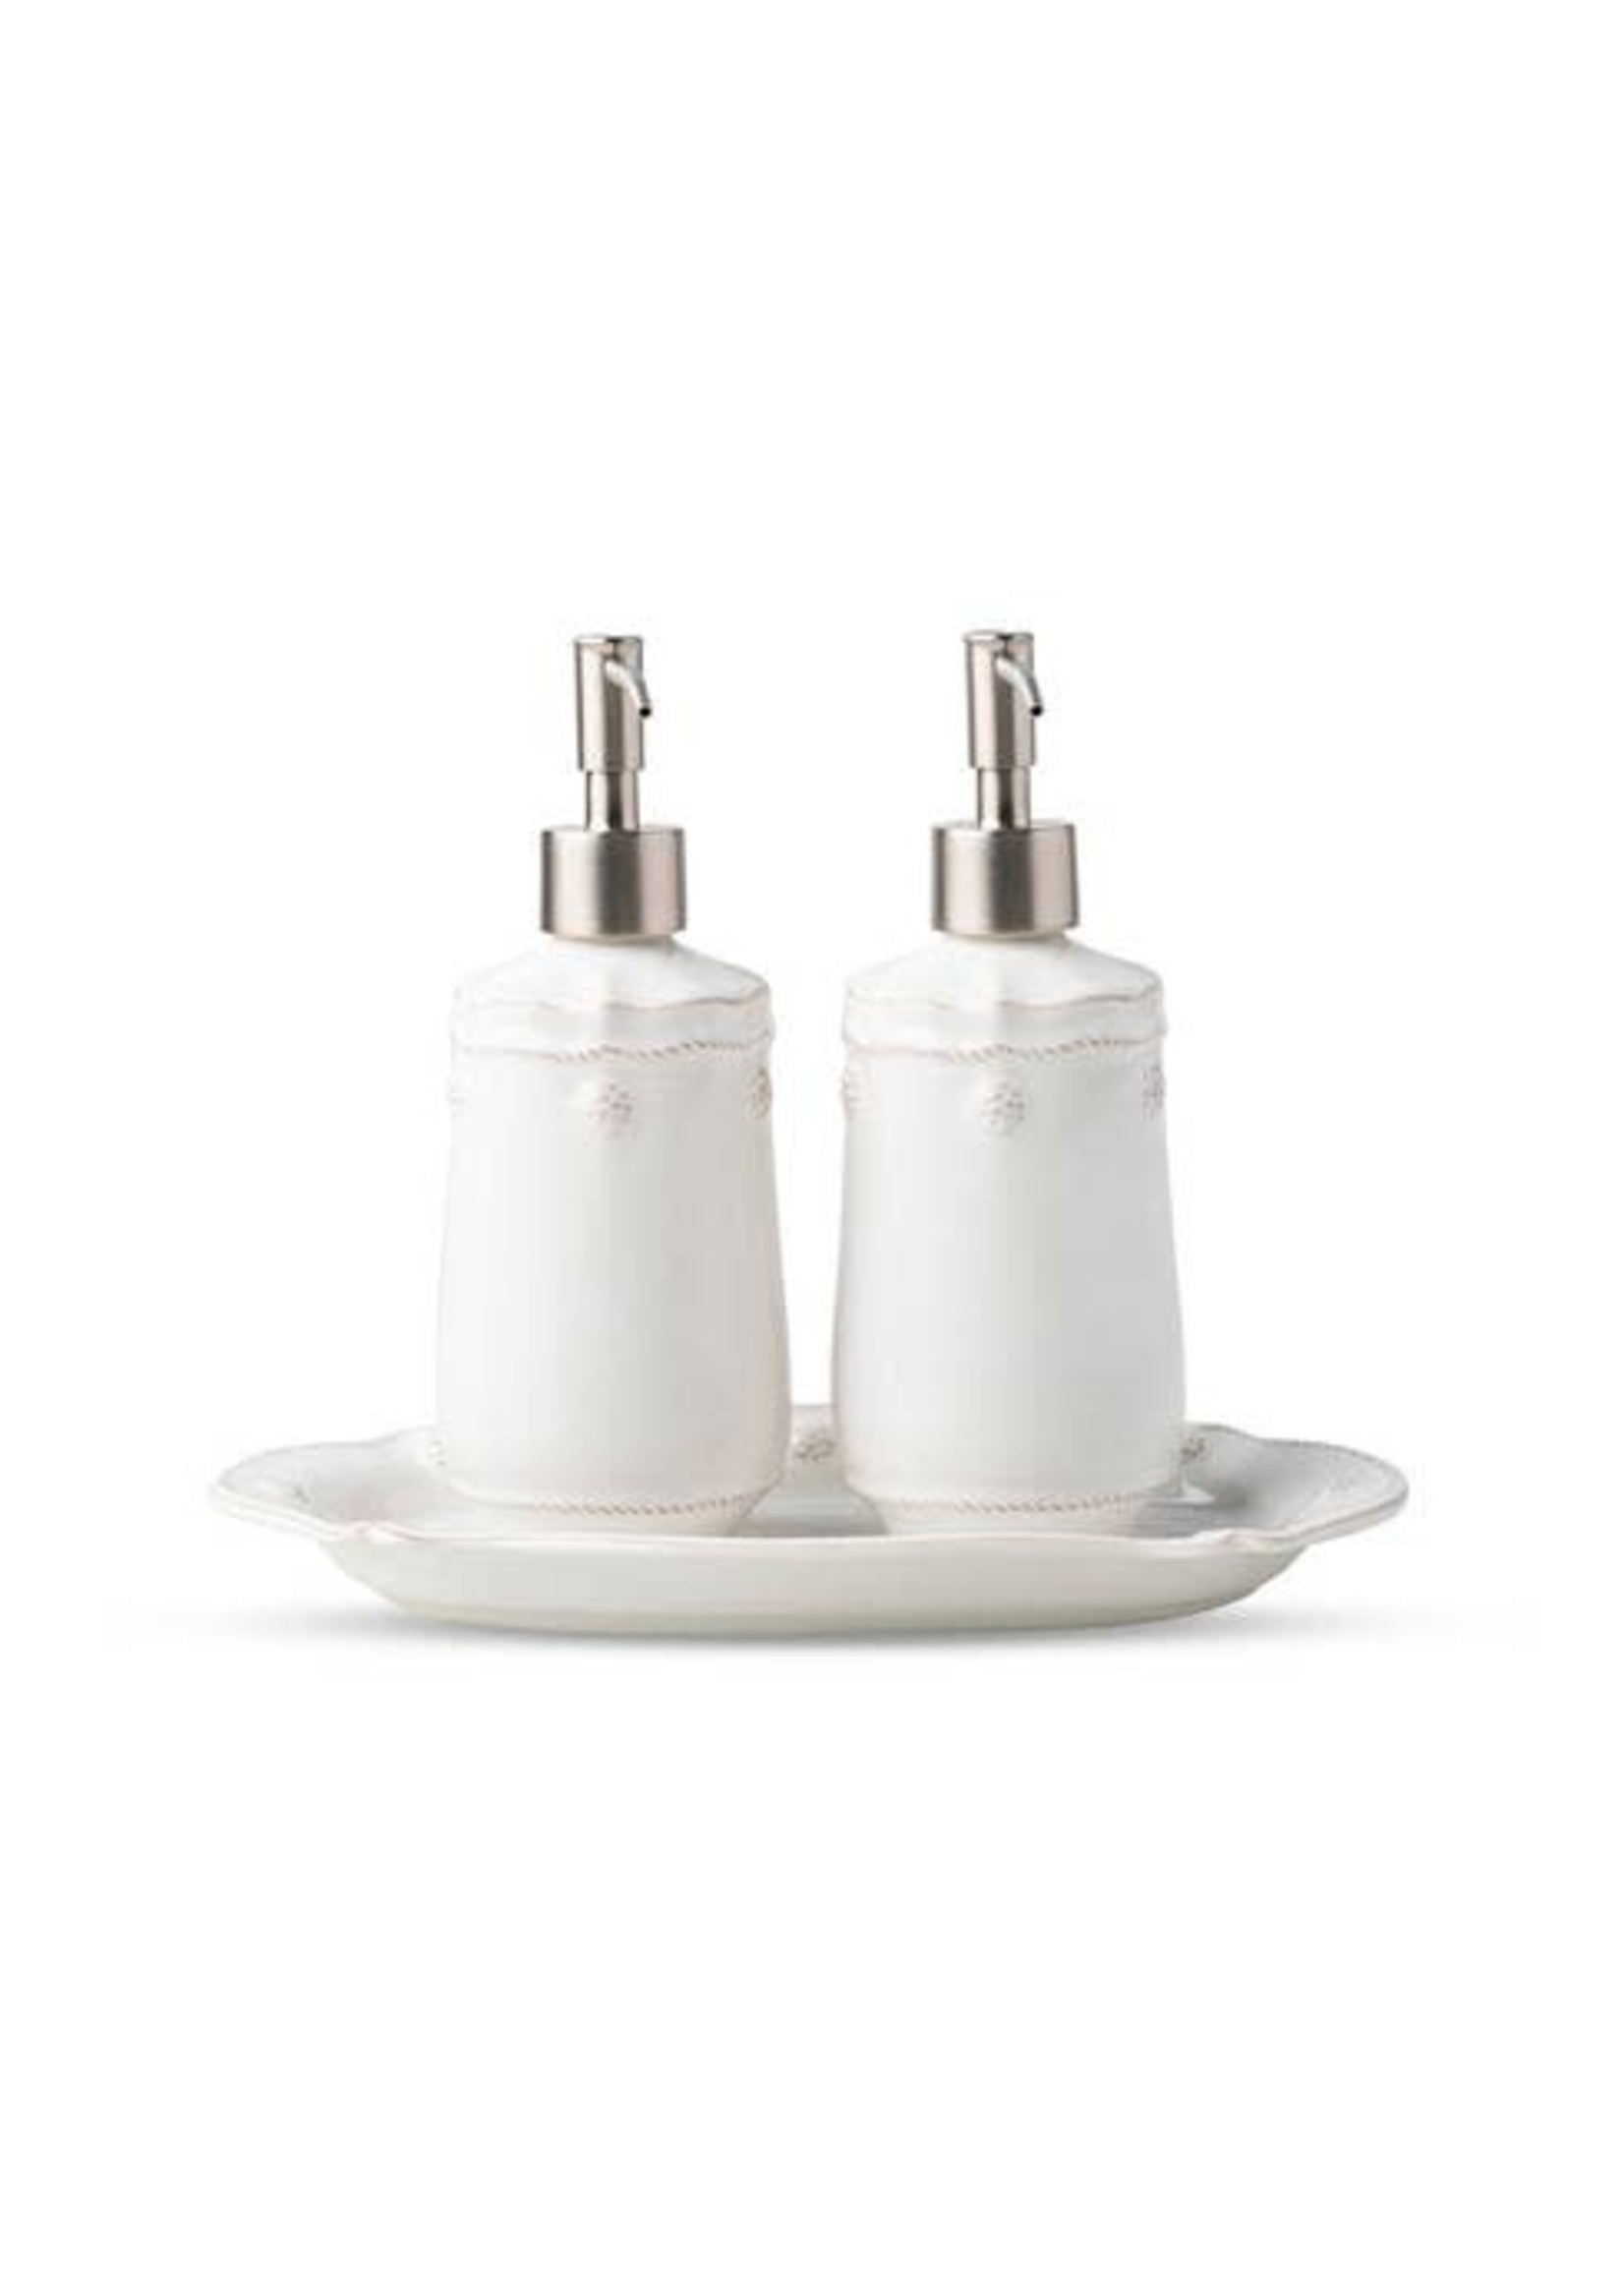 Juliska Office & Bath Berry & Thread Whitewash 3pc Kitchen Essentials Set (Soap/Lotion Dispenser & Tray)